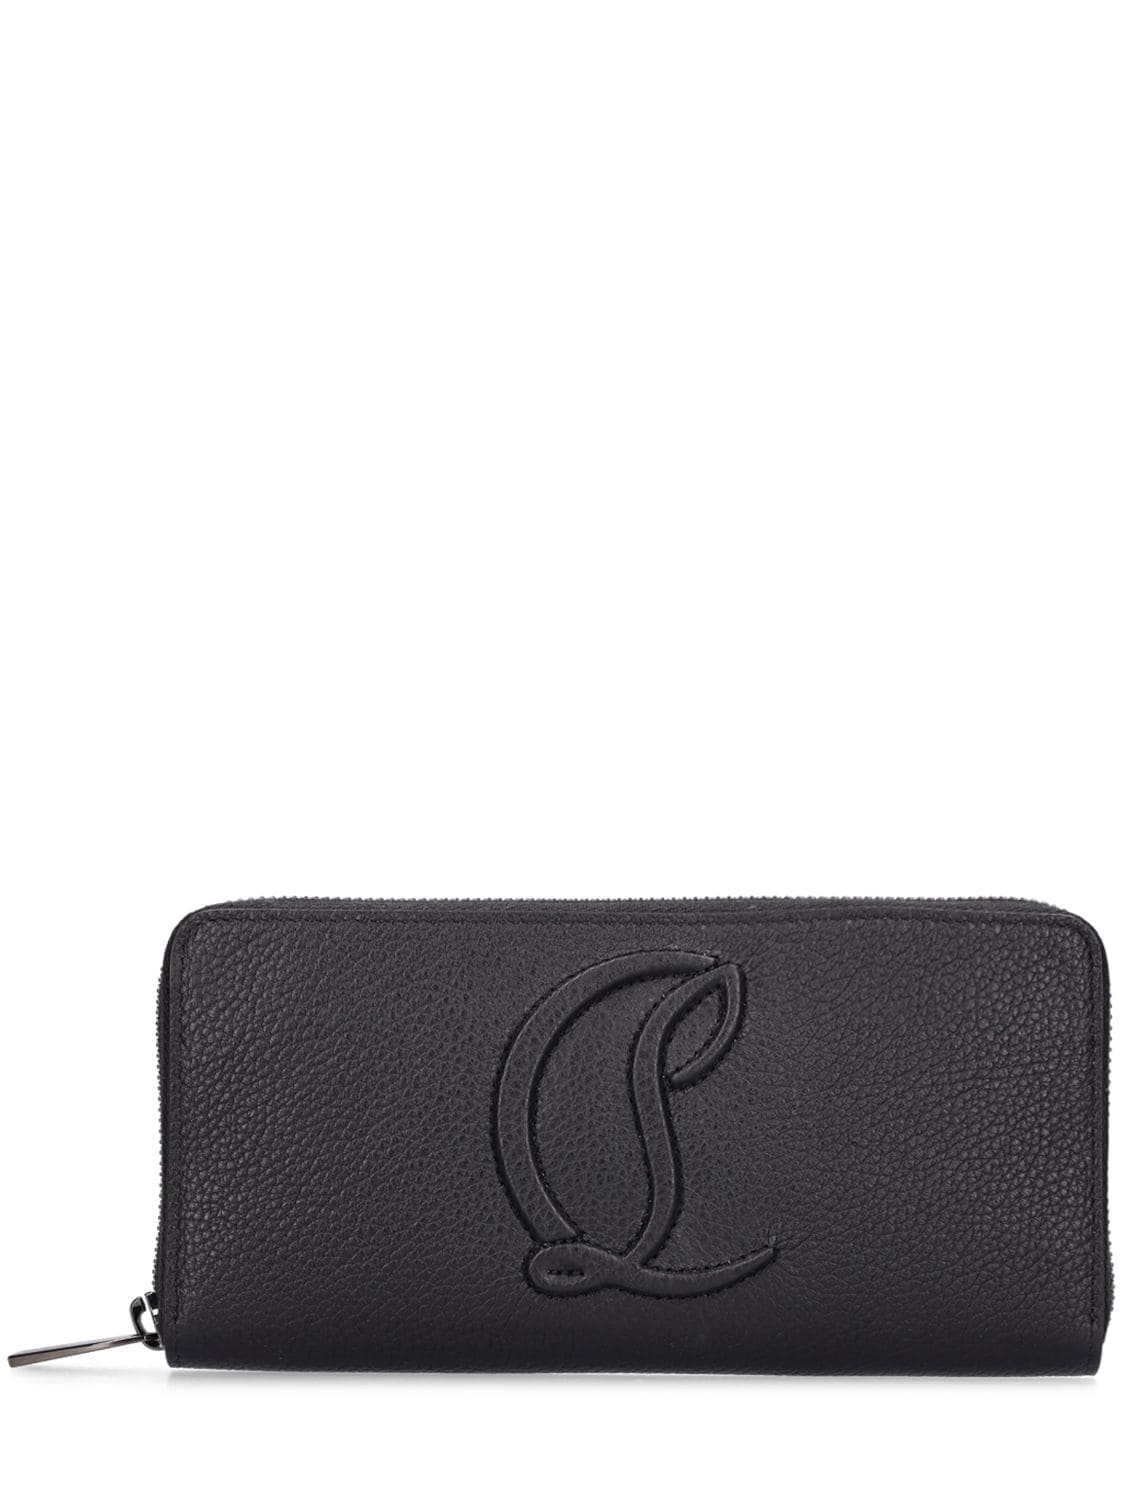 Christian Louboutin By My Side Long Leather Wallet W/logo In Black